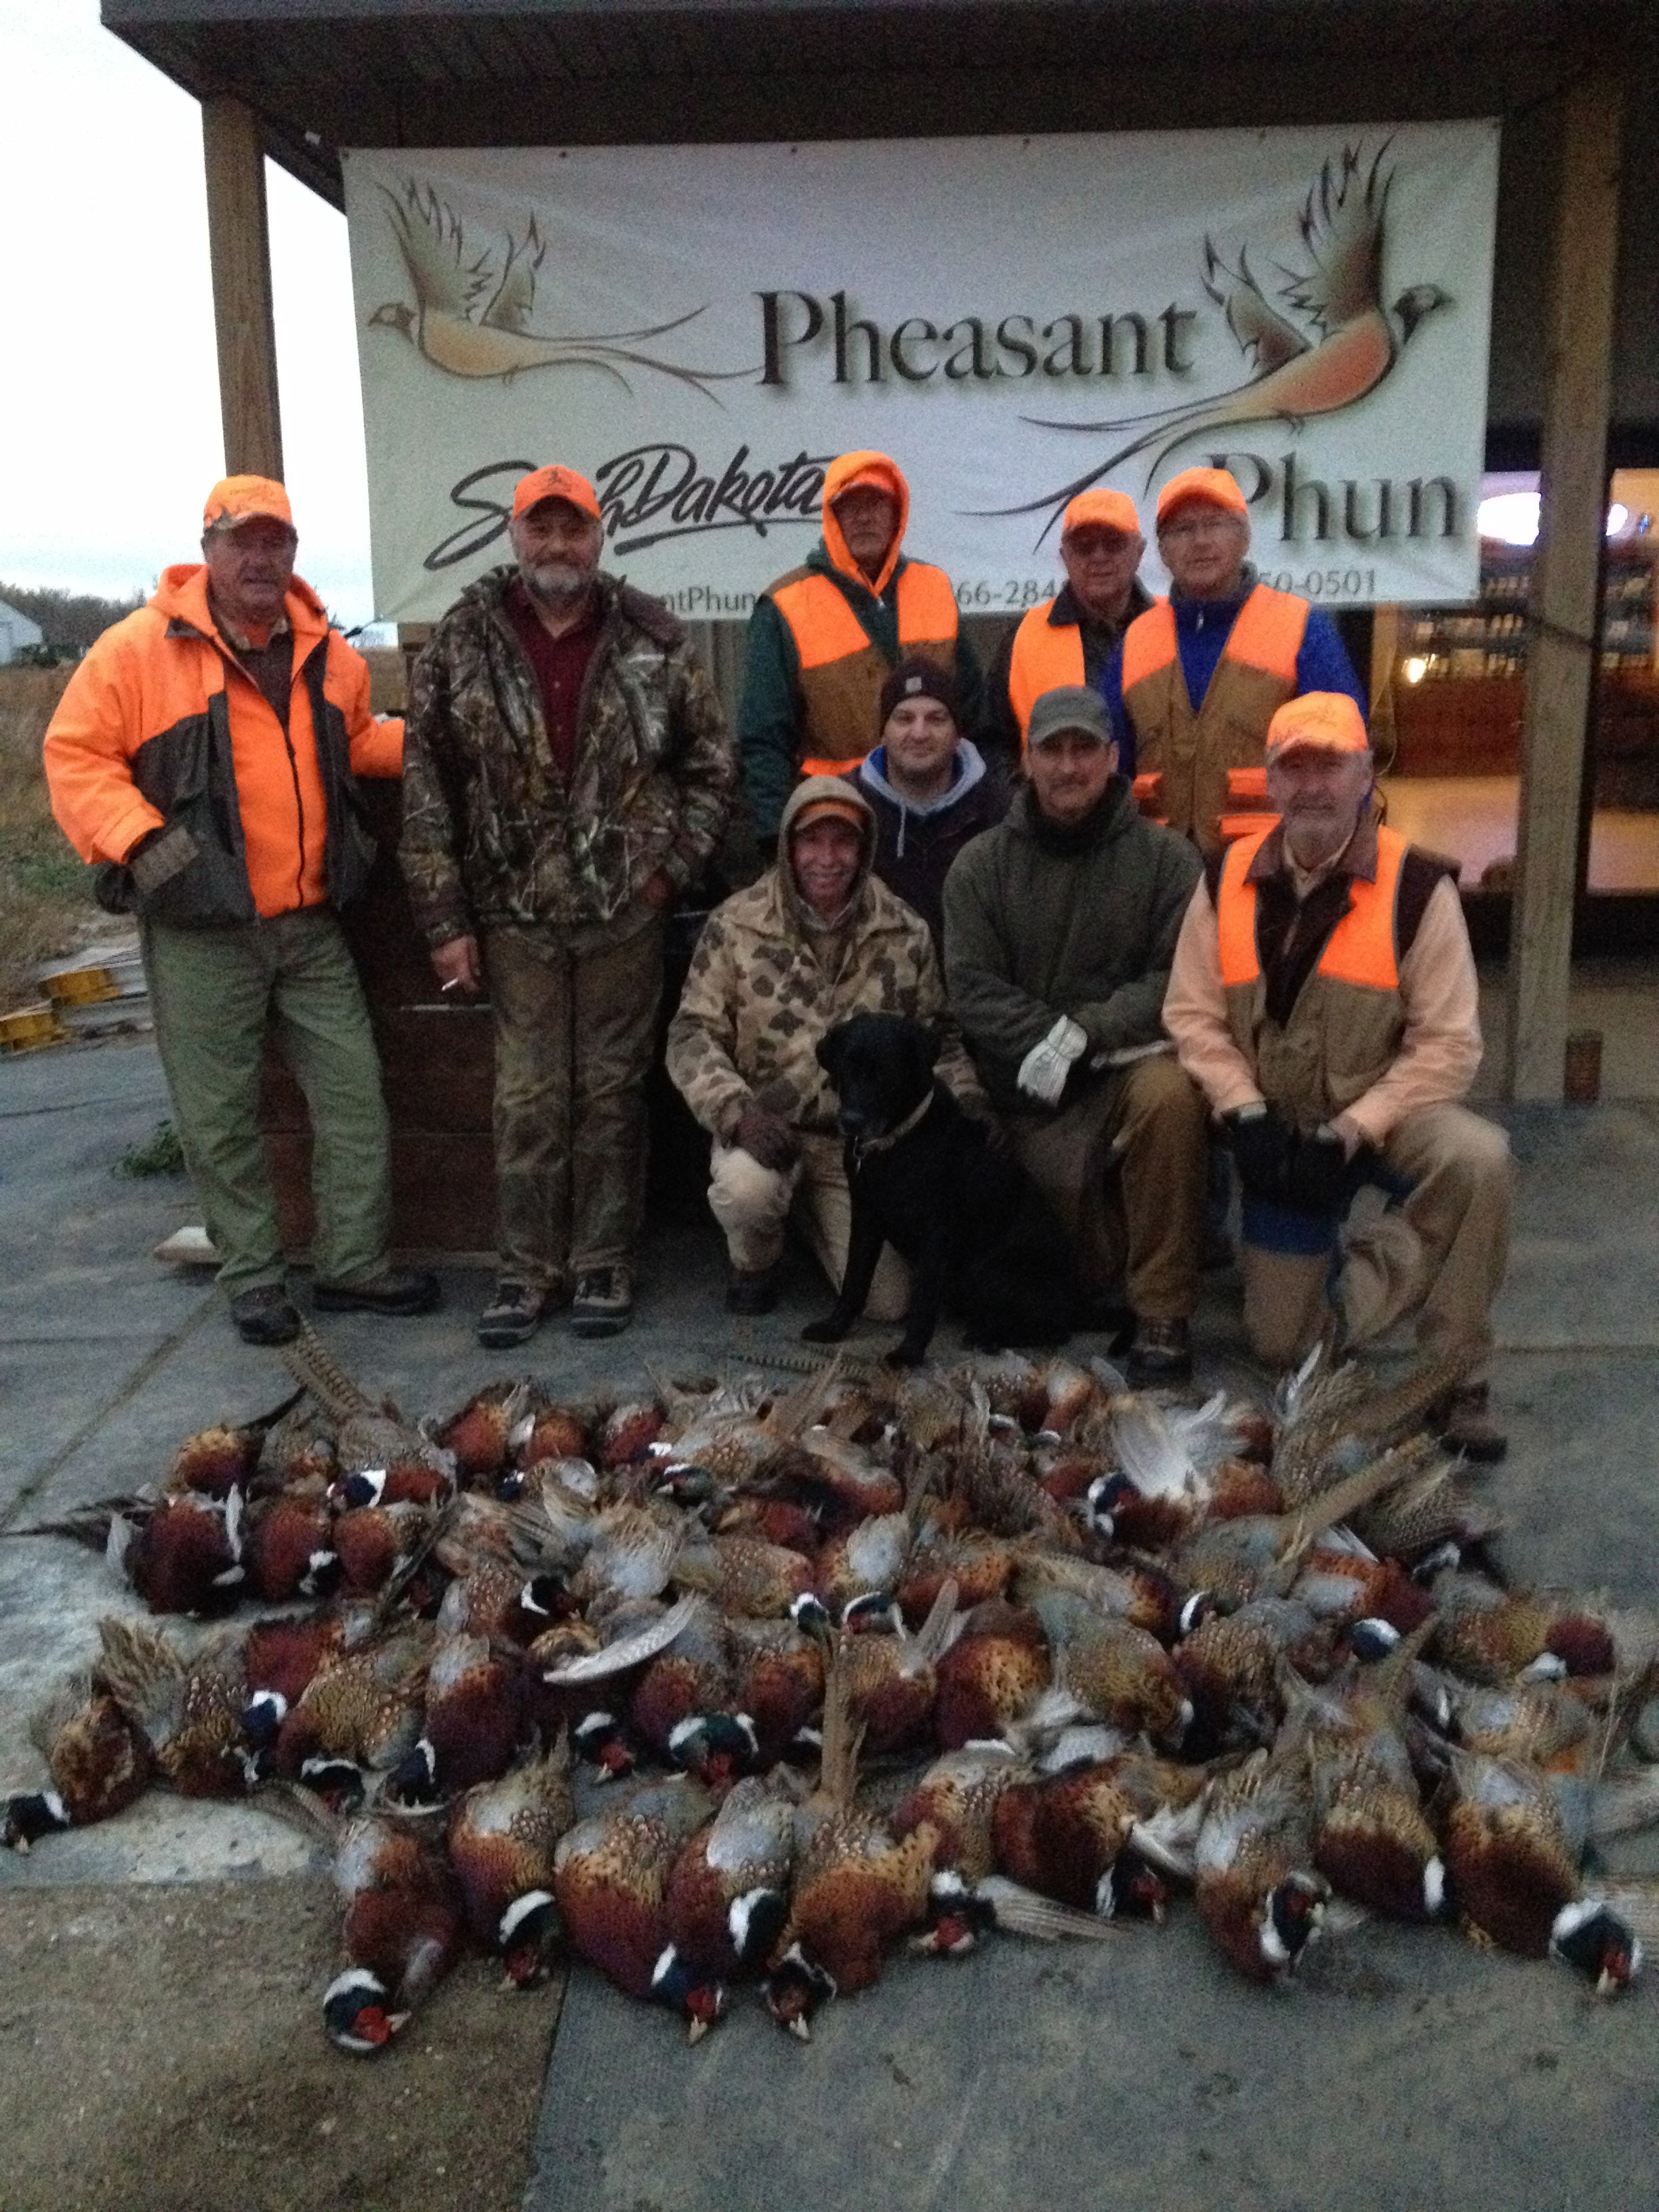 Pheasant Phun Inc.: All-Inclusive Pheasant Hunt Package 